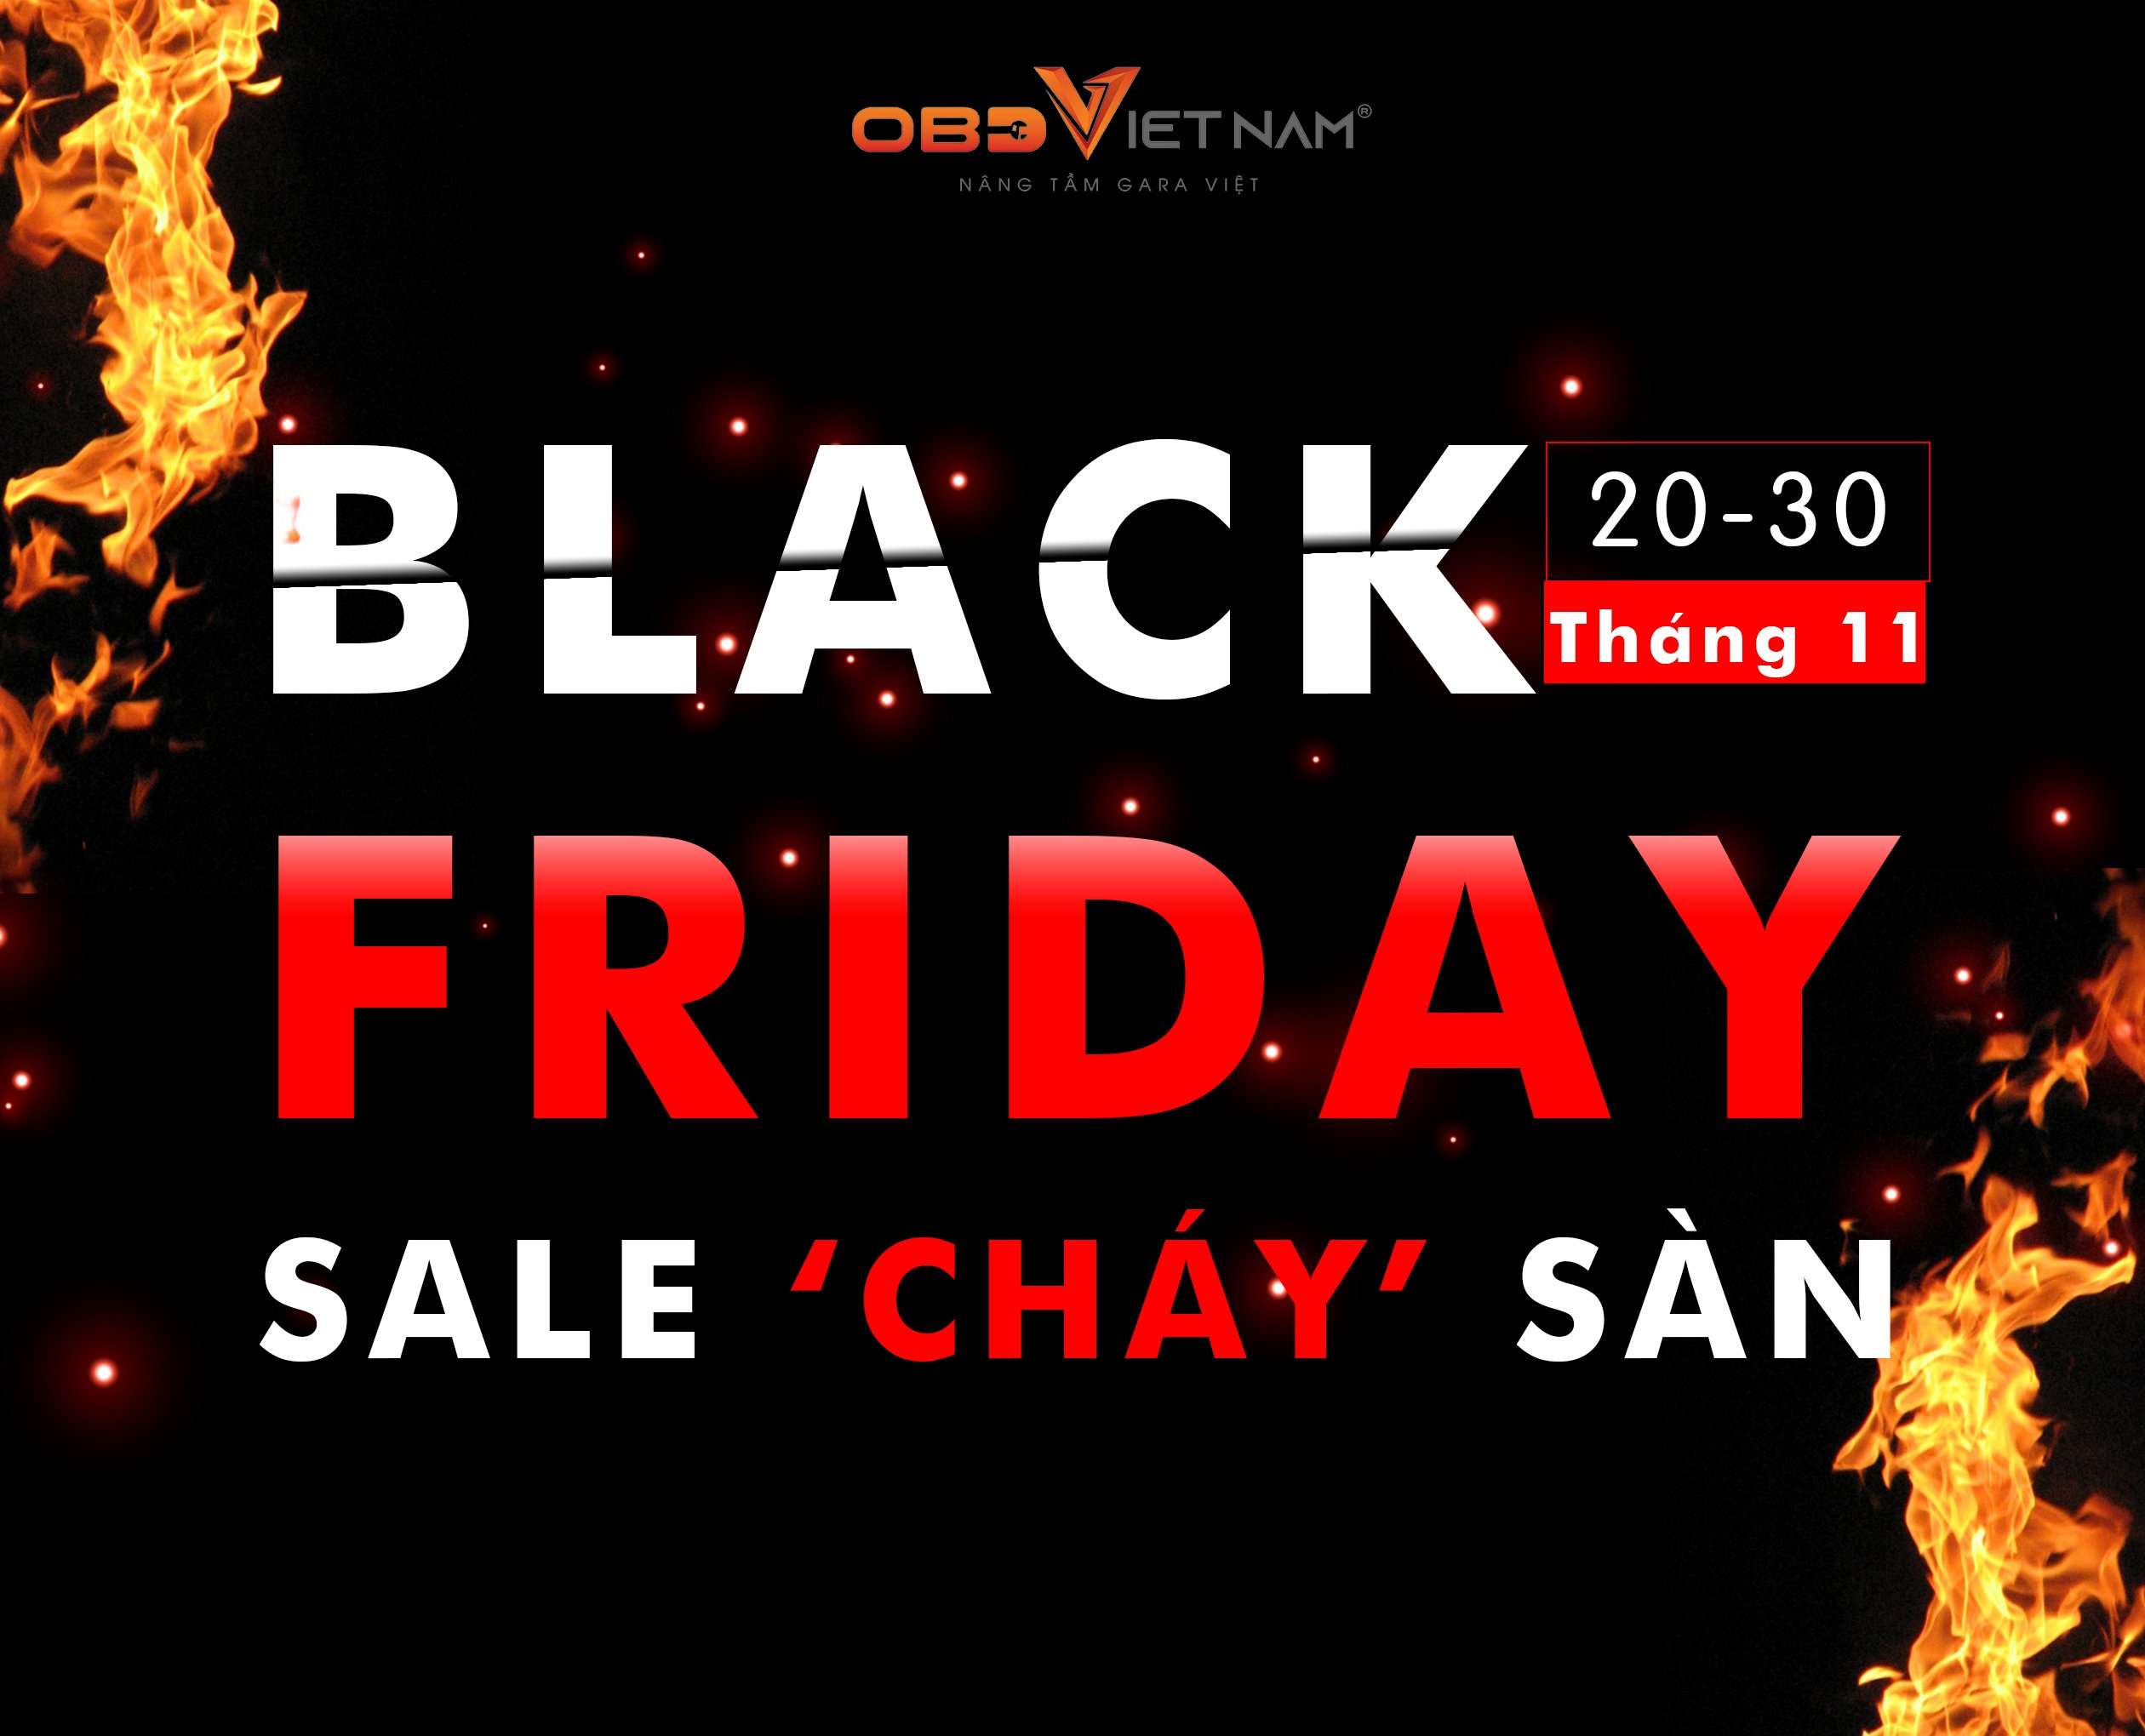 black-friday-sale-chay-san-obdvietnam (1)